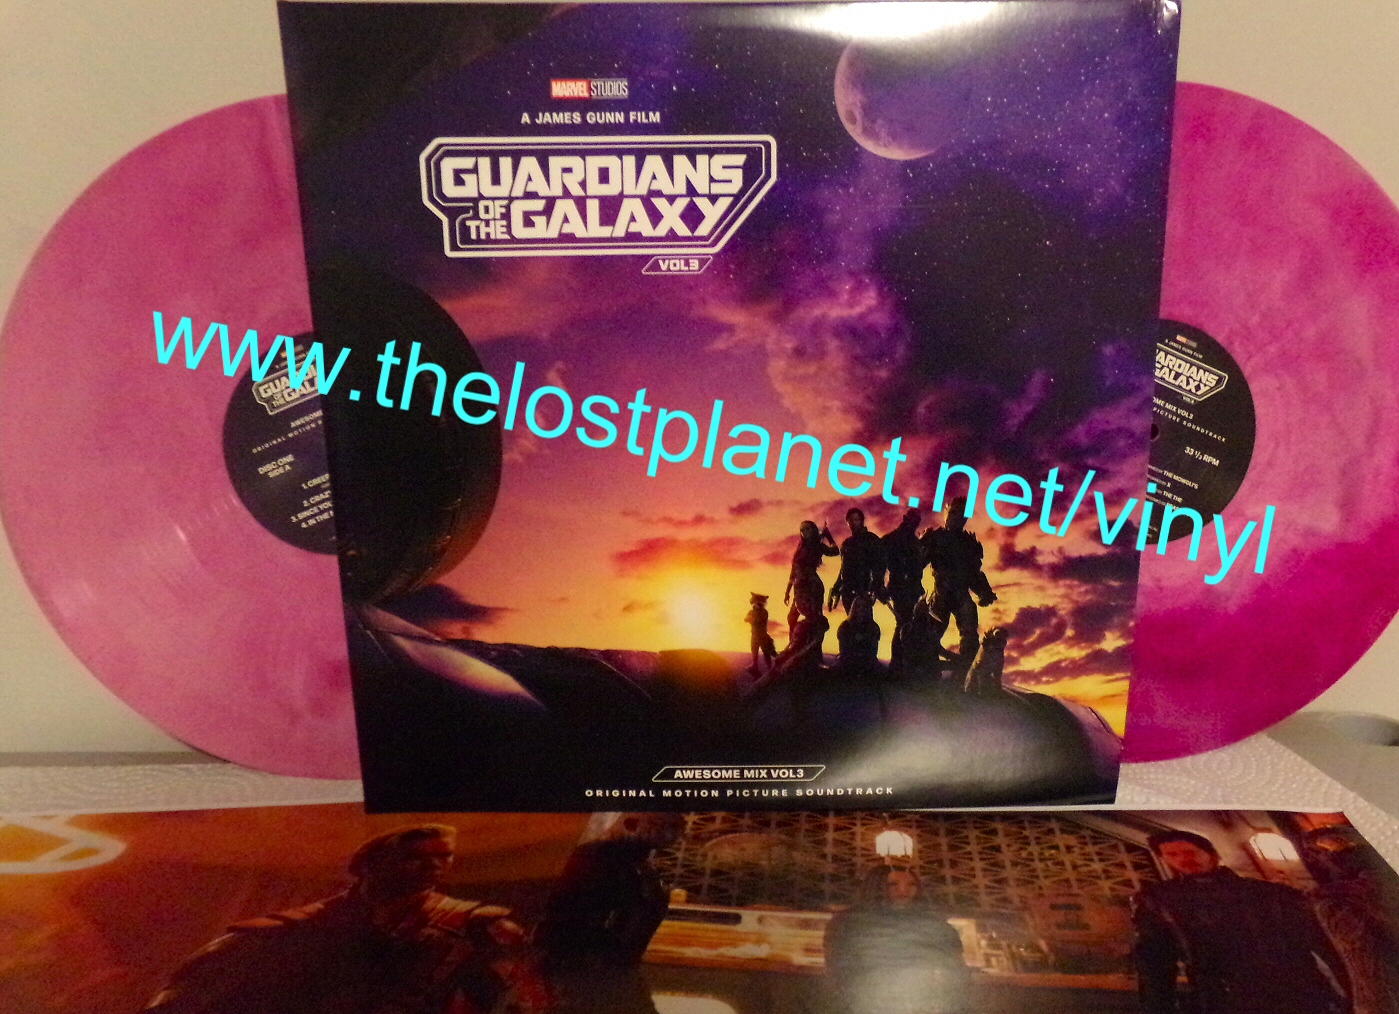 Guardians of the Galaxy 3 on galaxy swirl vinyl